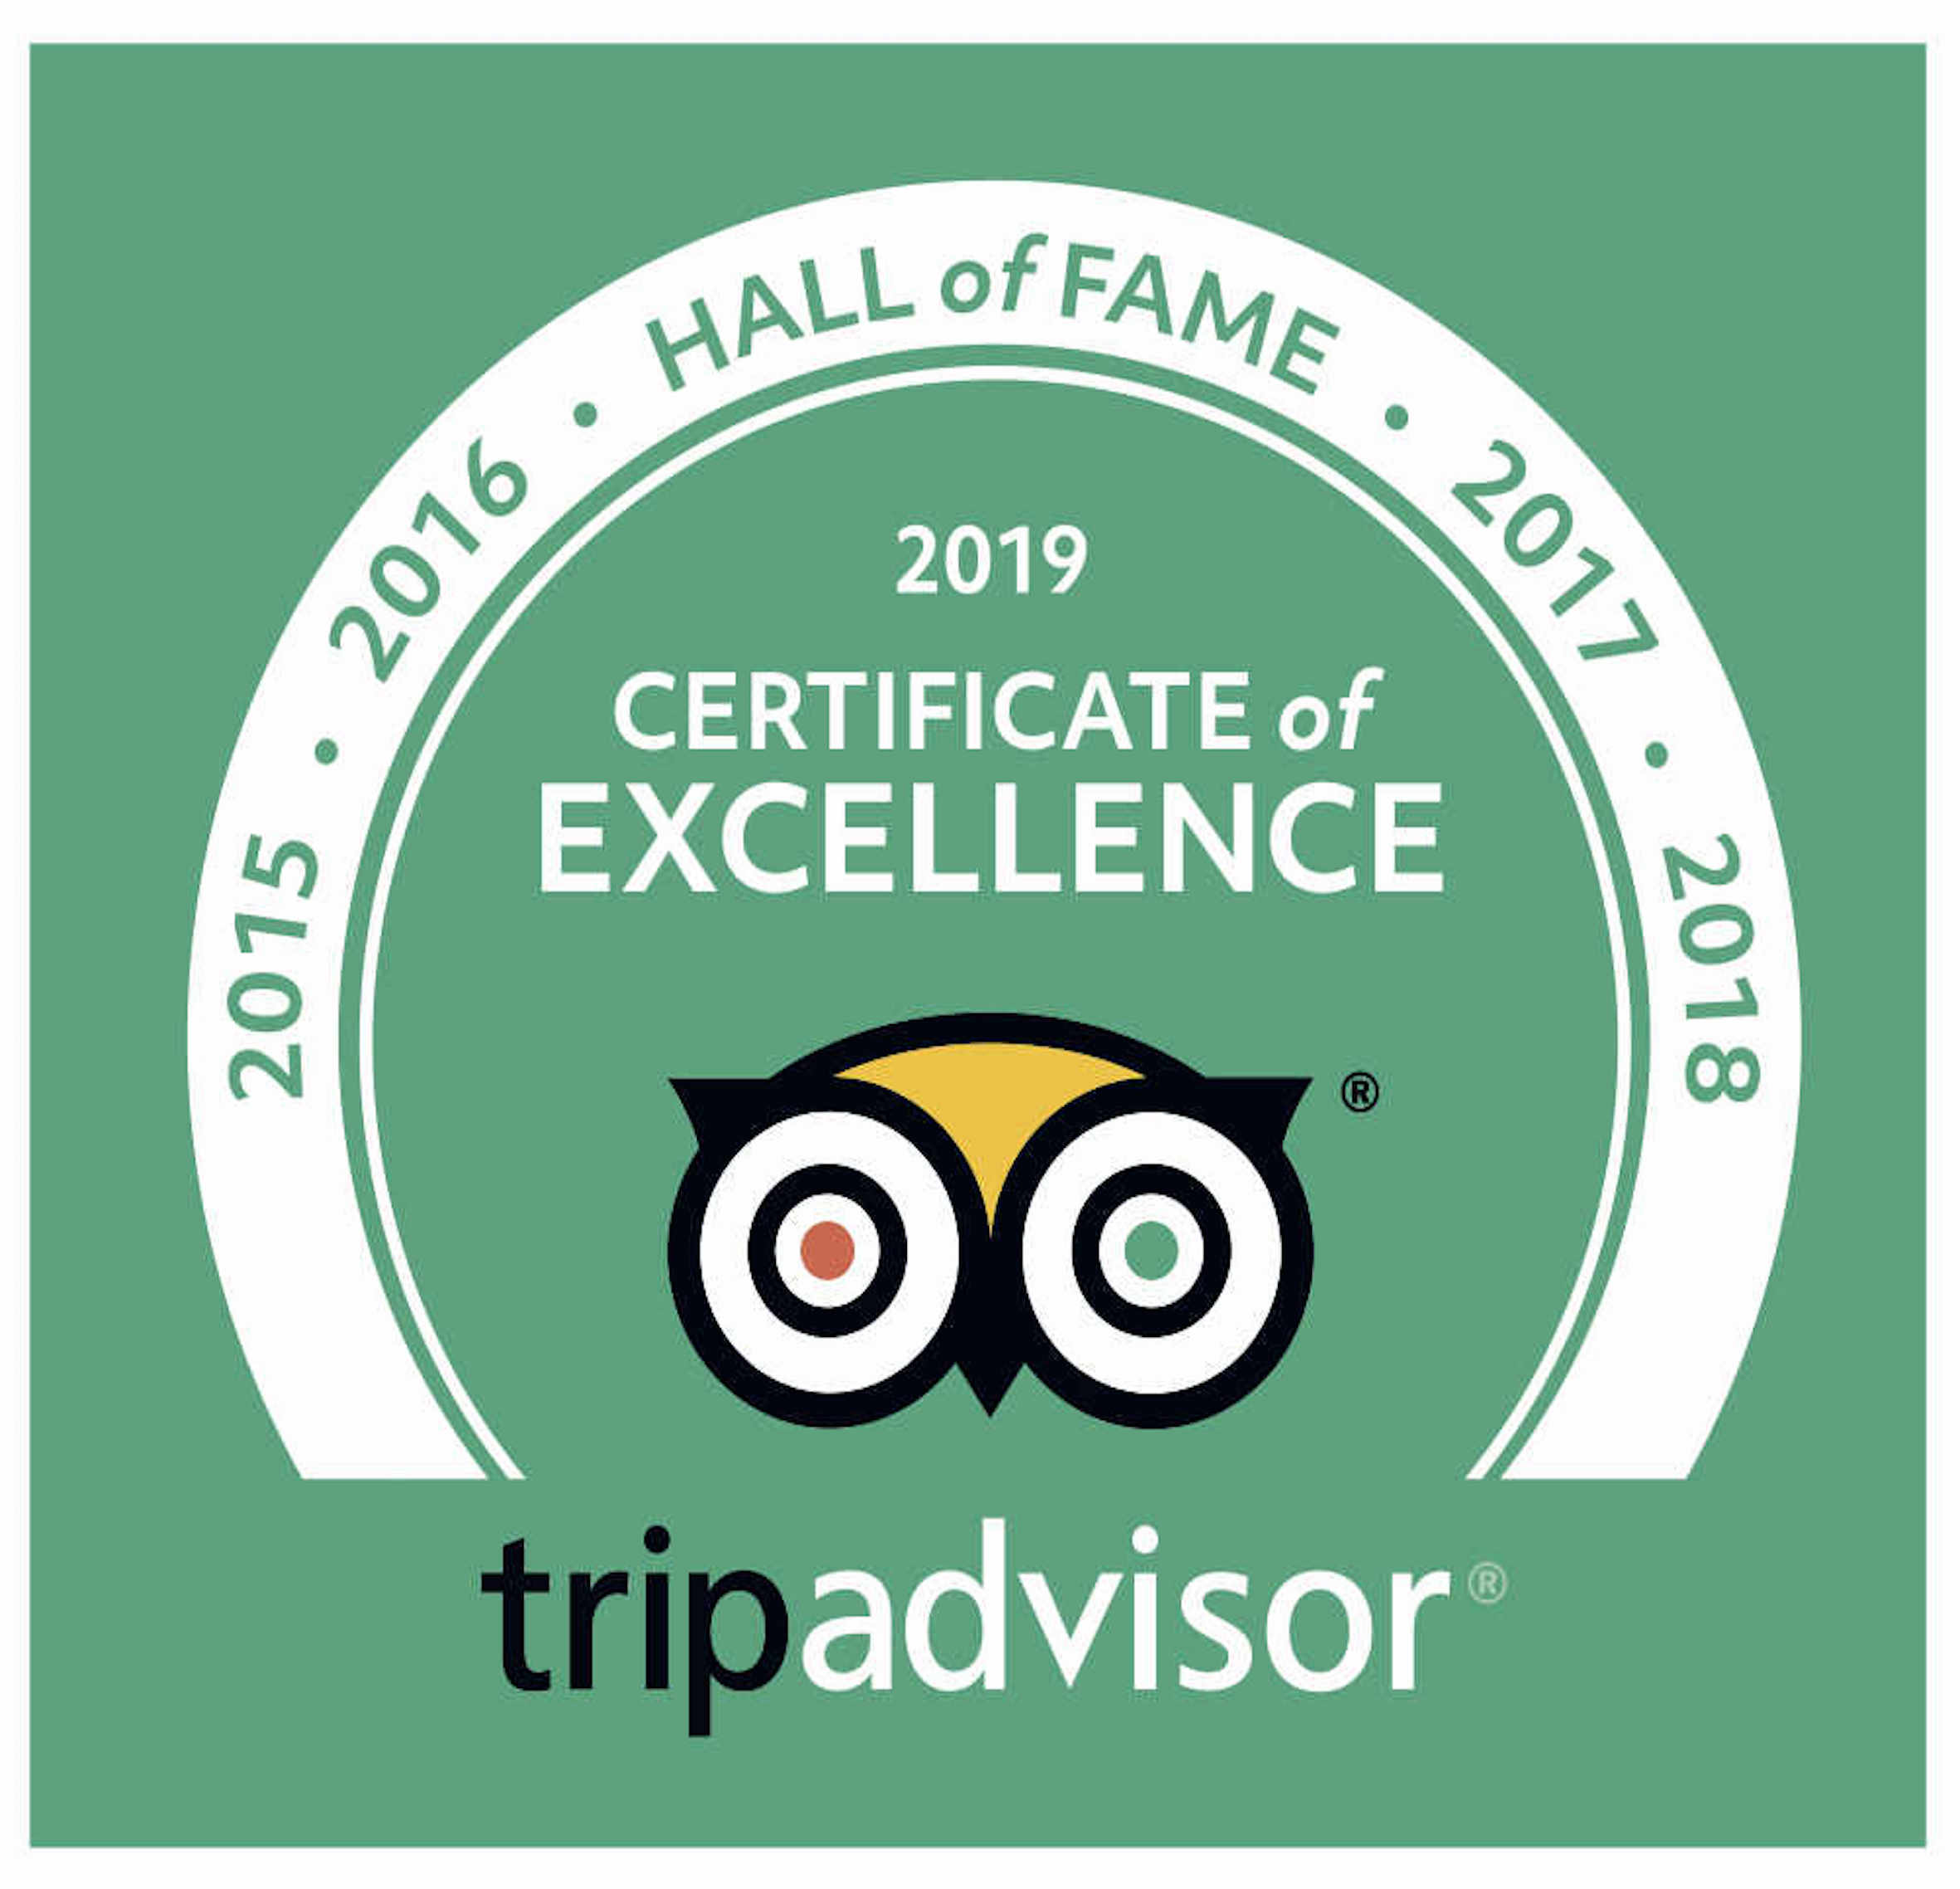 Gorillas and Wildlife winner of 2015,2016,2017 certificate of excellence trip advisor